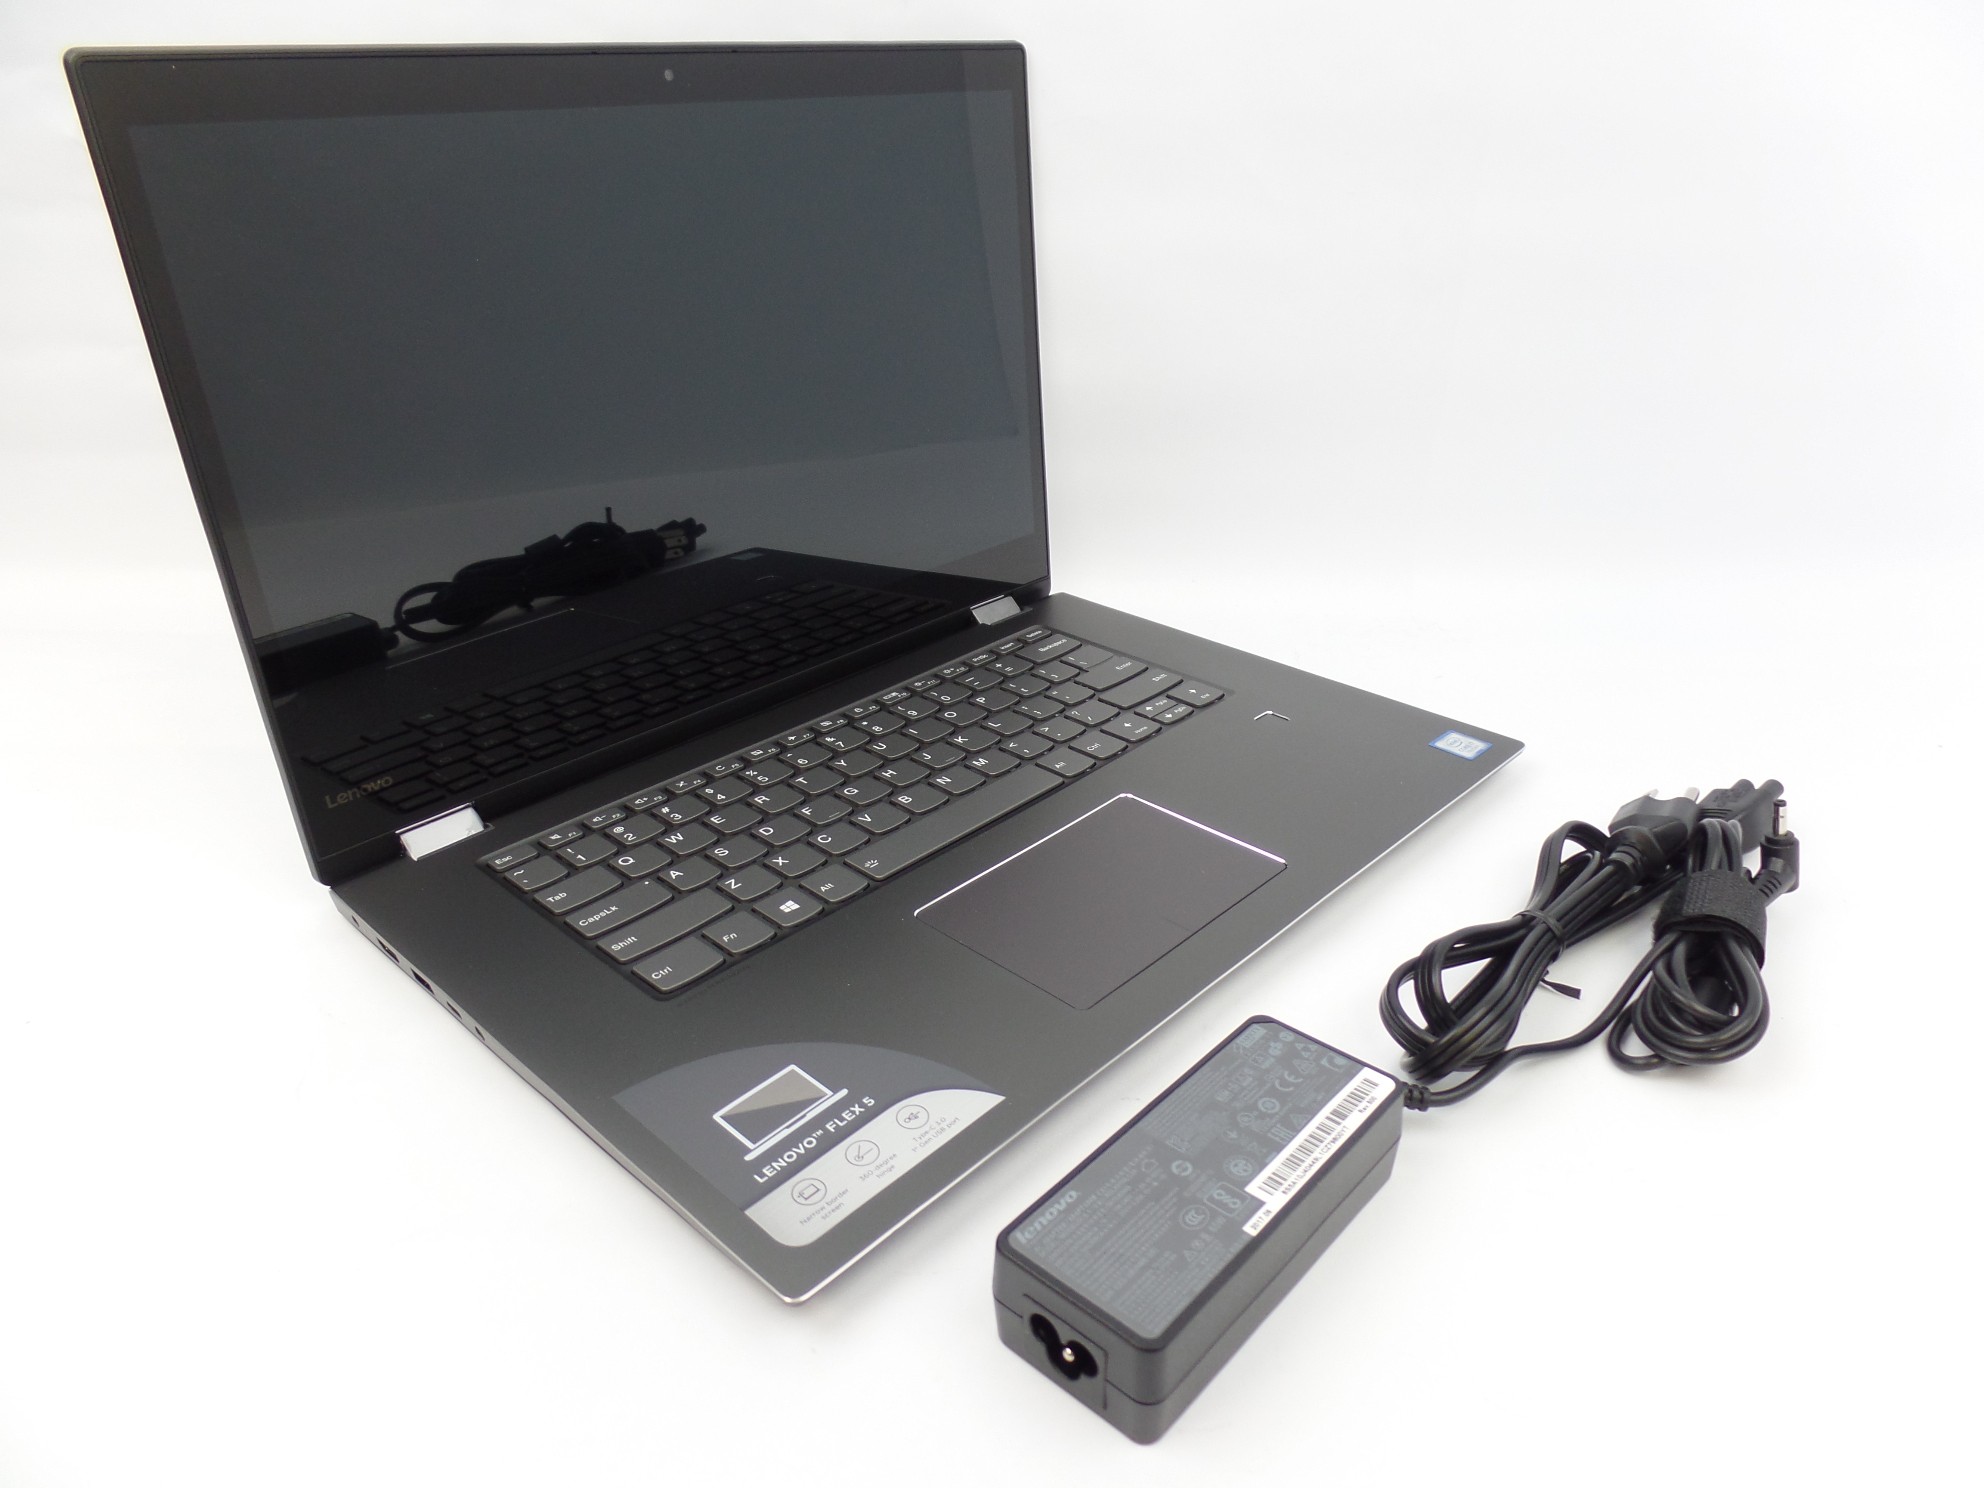 Lenovo Flex 5 1570 15.6" FHD IPS Touch i7-7500U 2.7GHz 8GB 512GB 2in1 Laptop W10